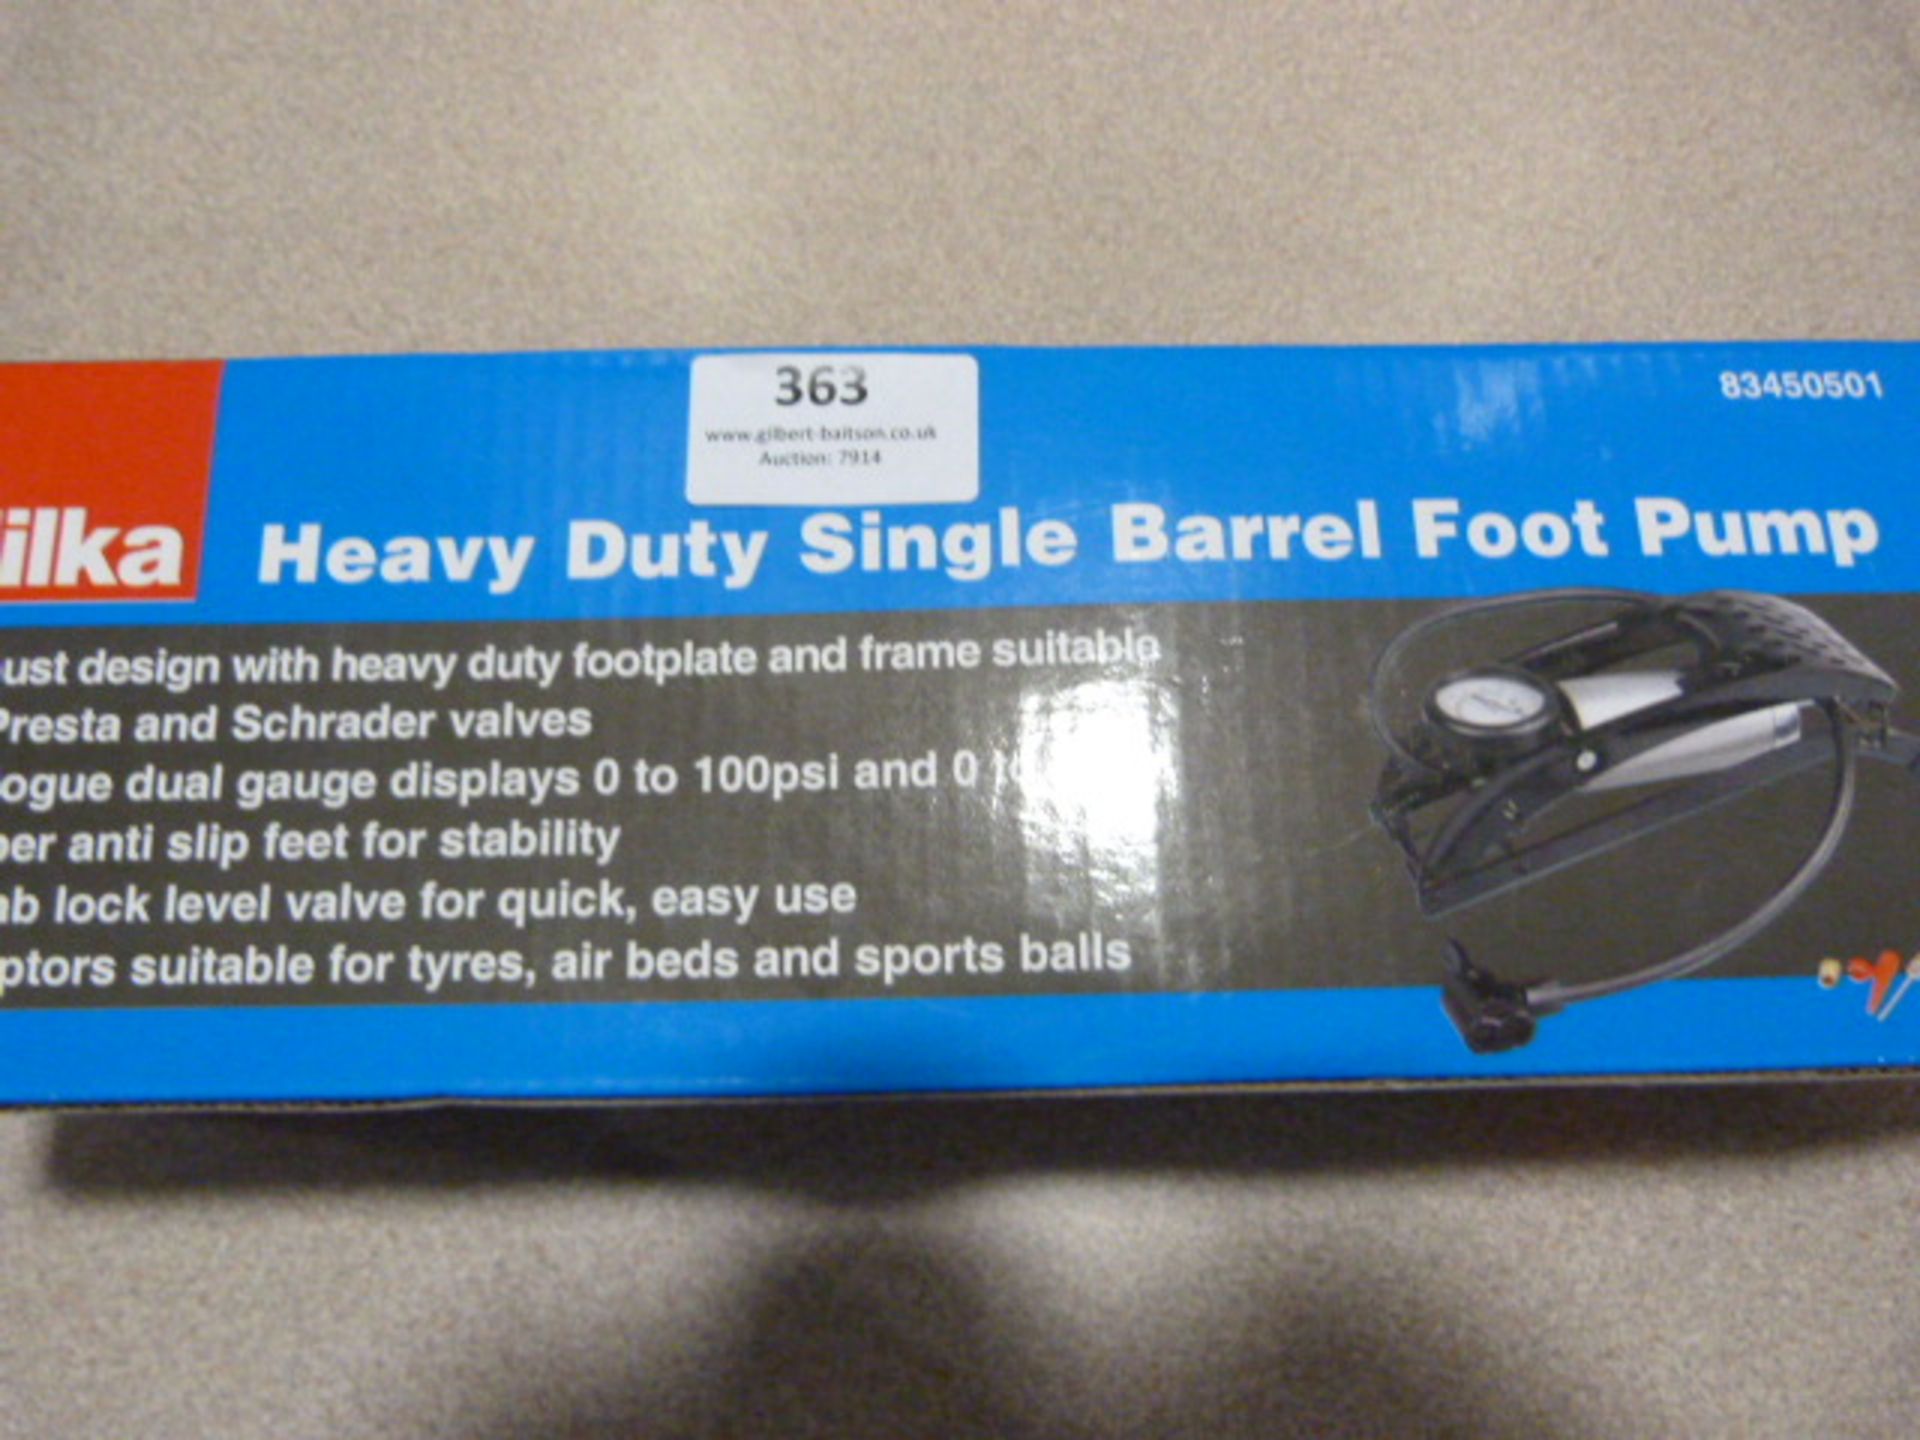 *Hilka Heavy Duty Single Barrel Footpump